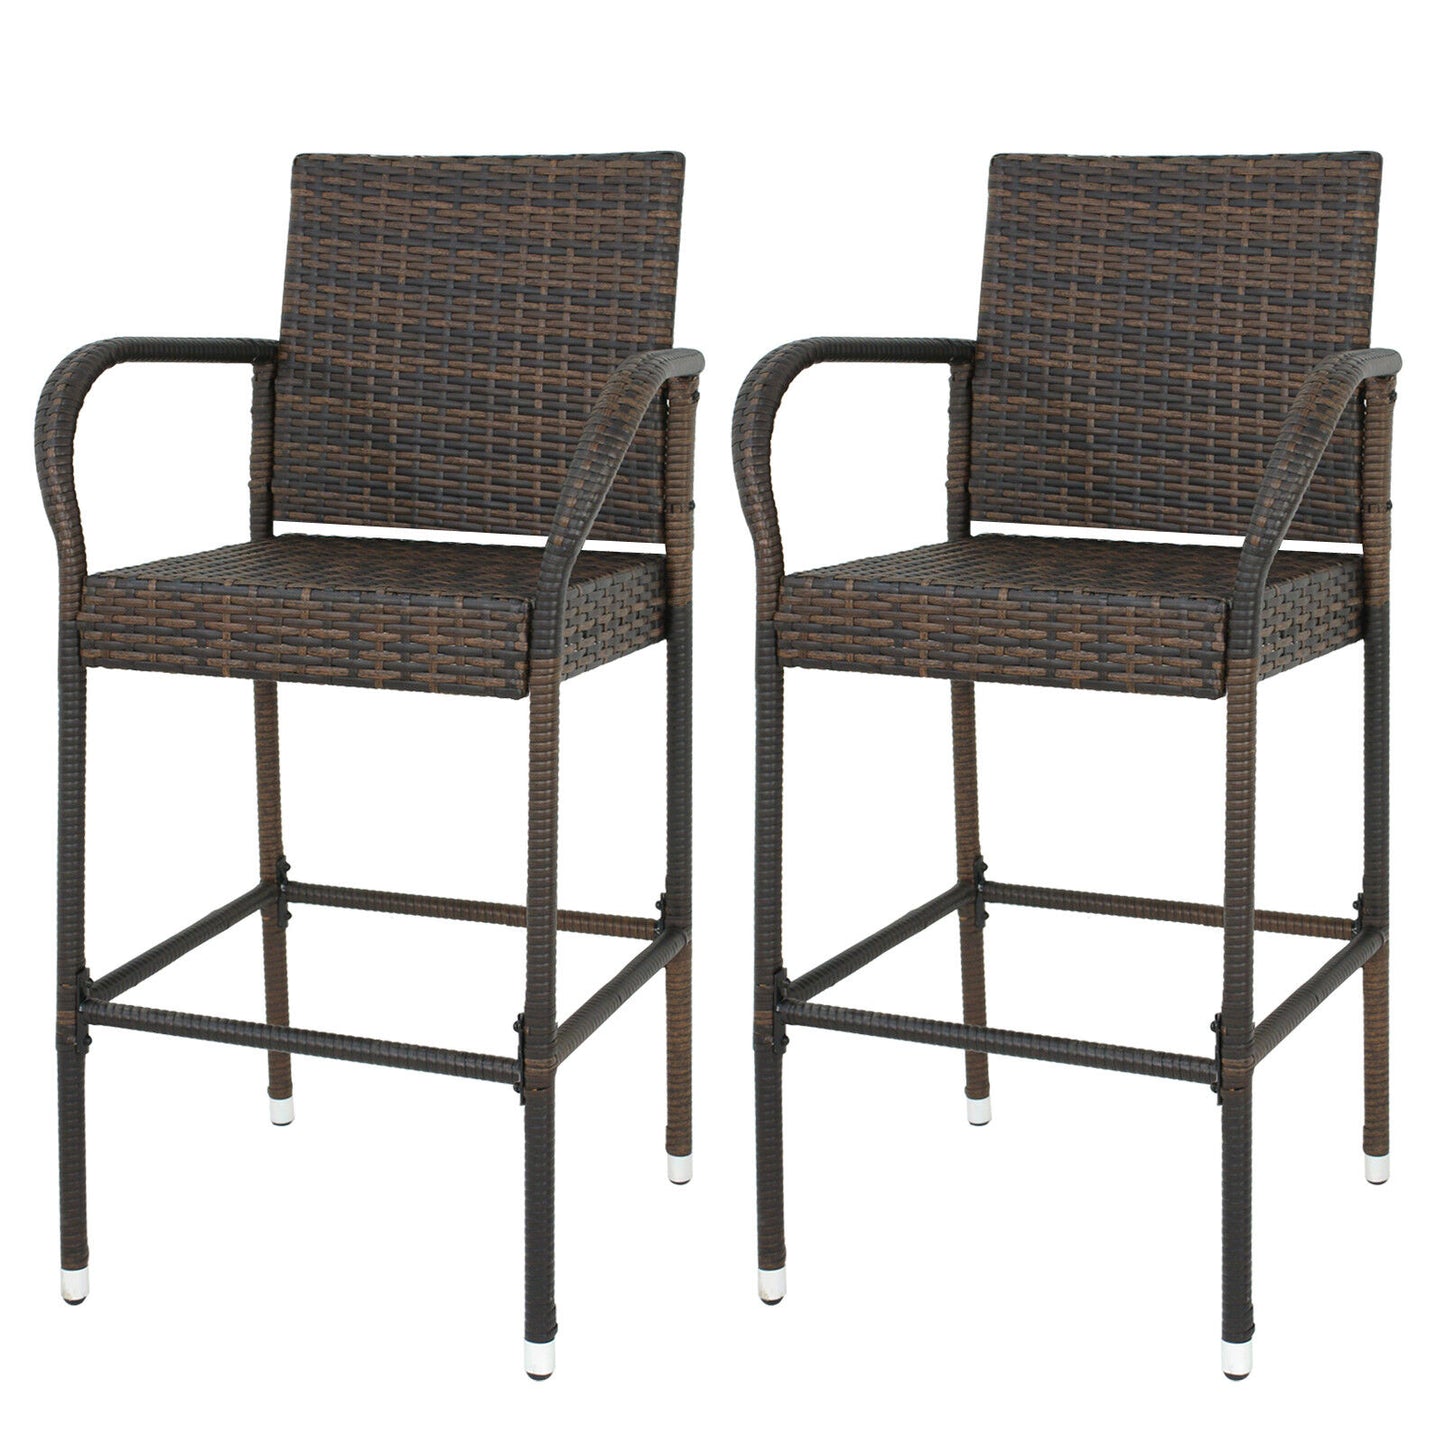 Set Of 2 Wicker Bar Chair W/ Adjustable Cool Bar Ice Bucket Backyard Outdoor